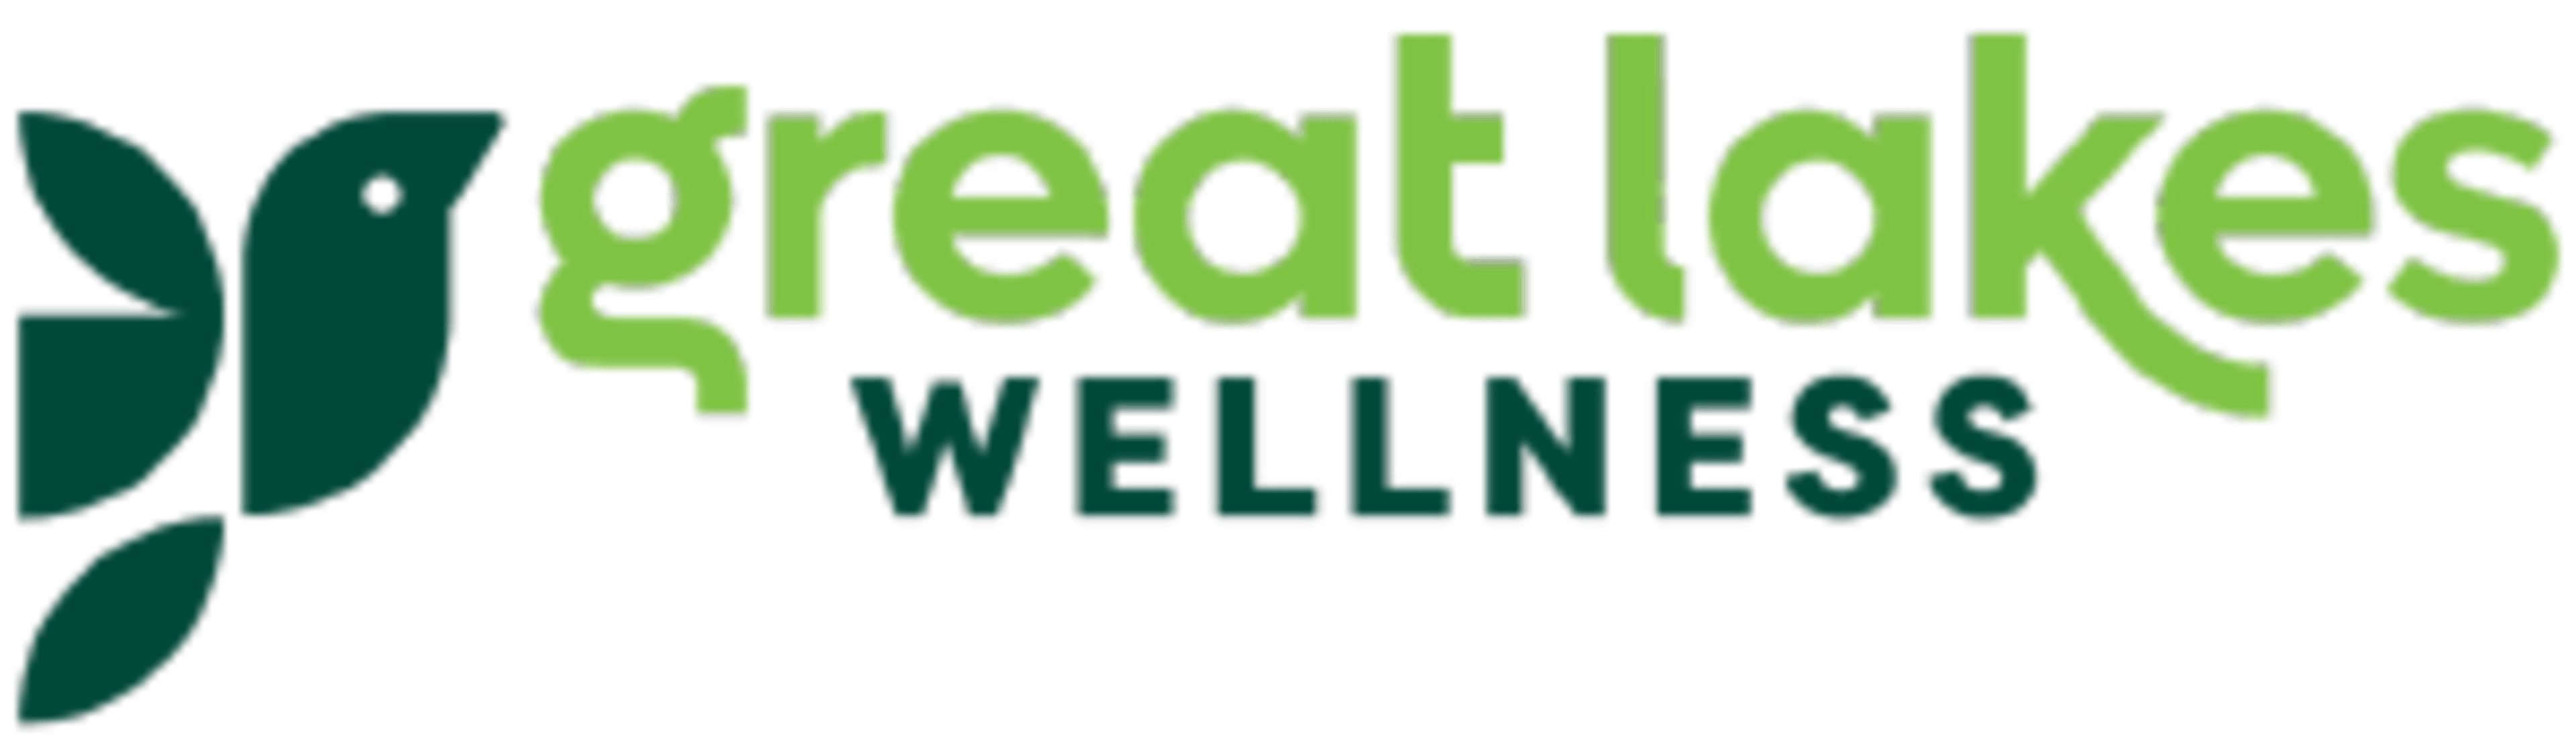 Great Lakes Wellness Code